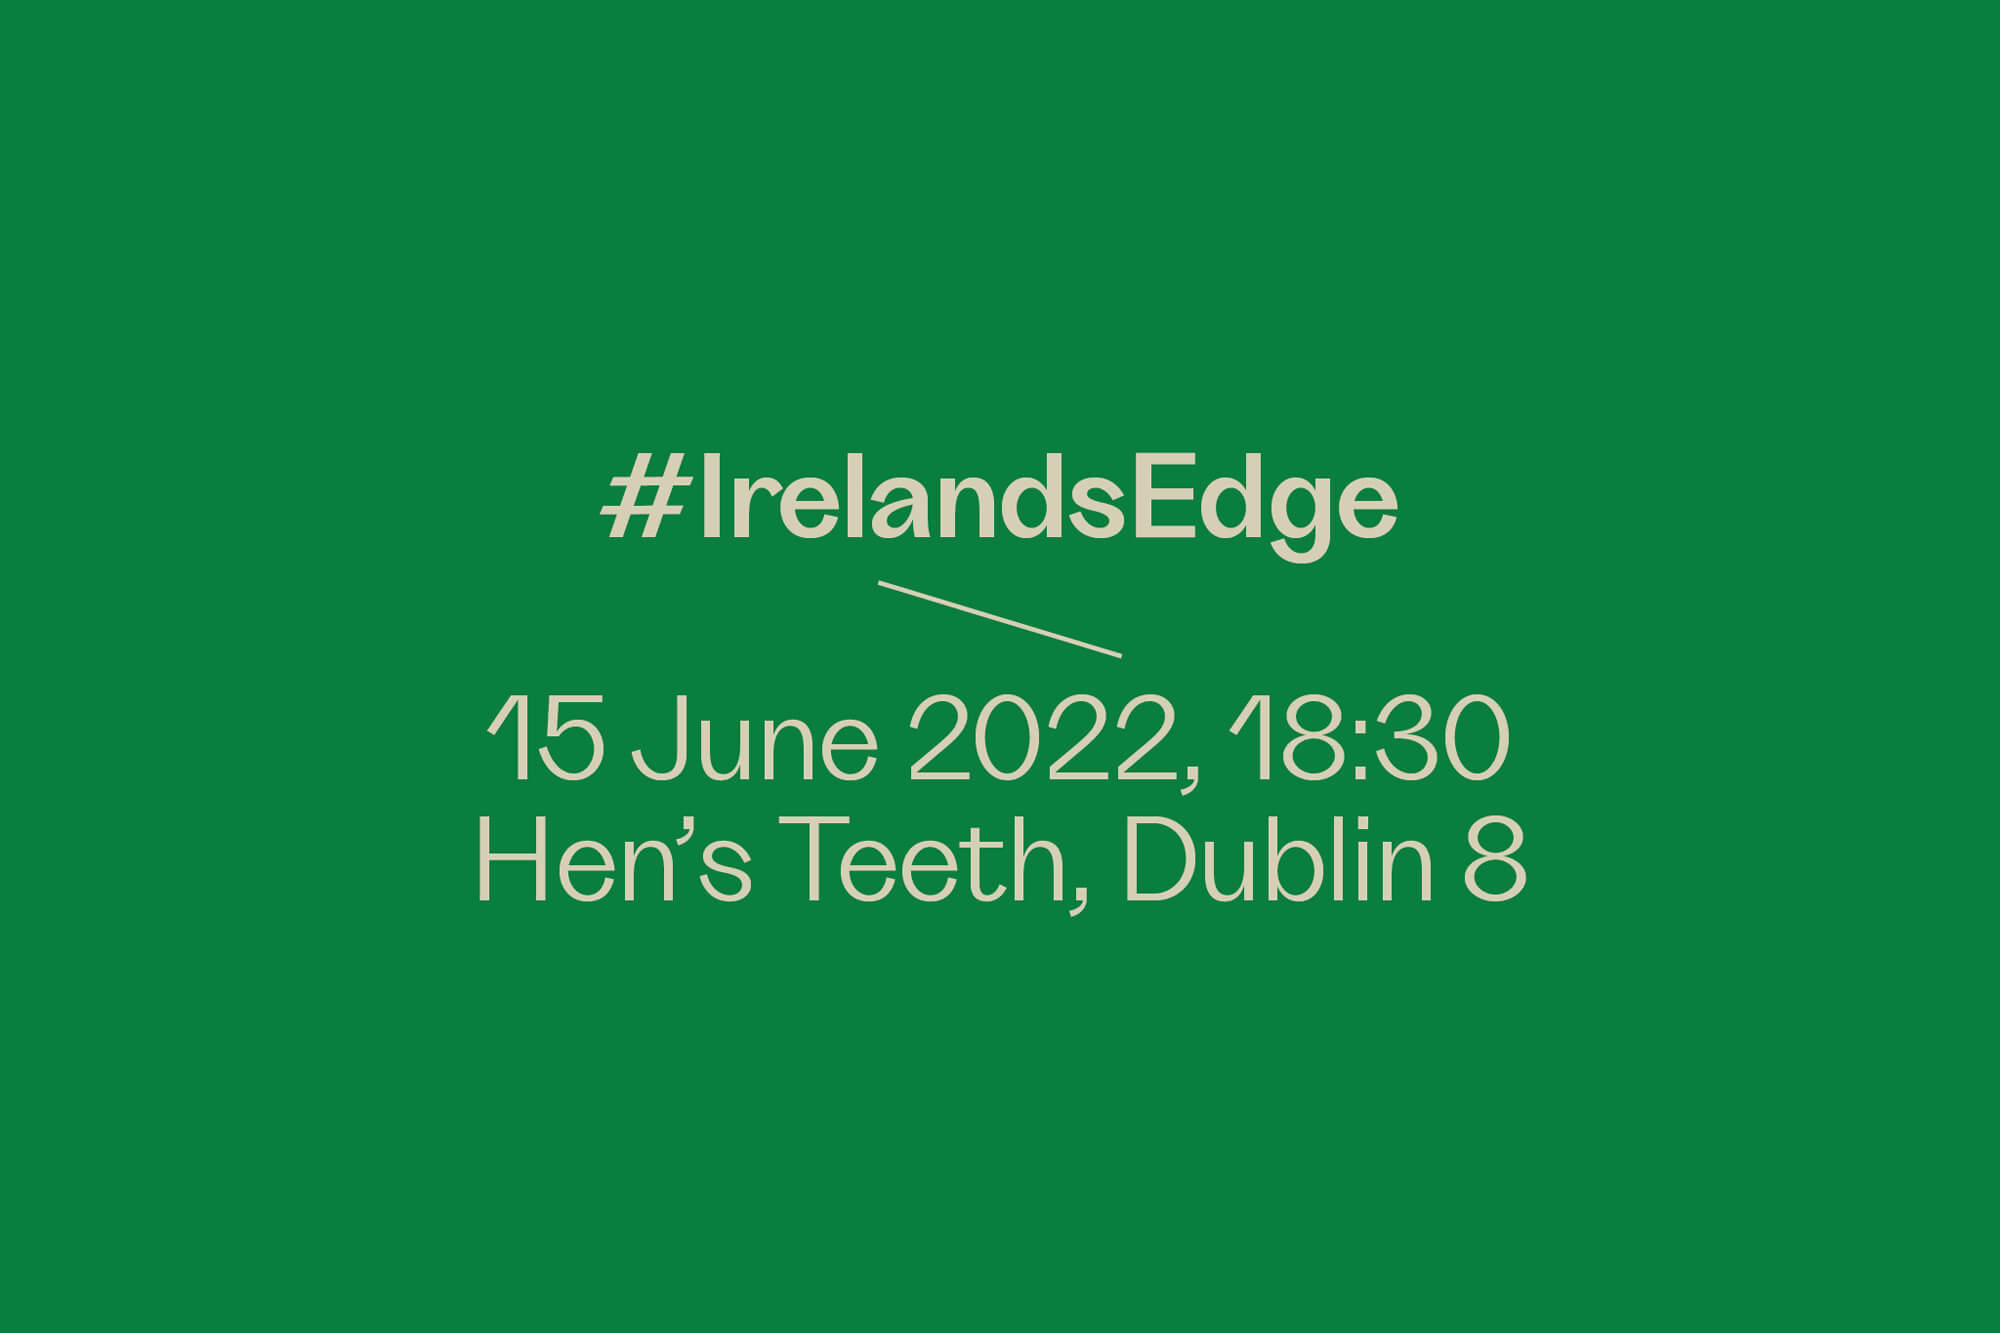 Ireland's Edge – Le Chéile Come Together